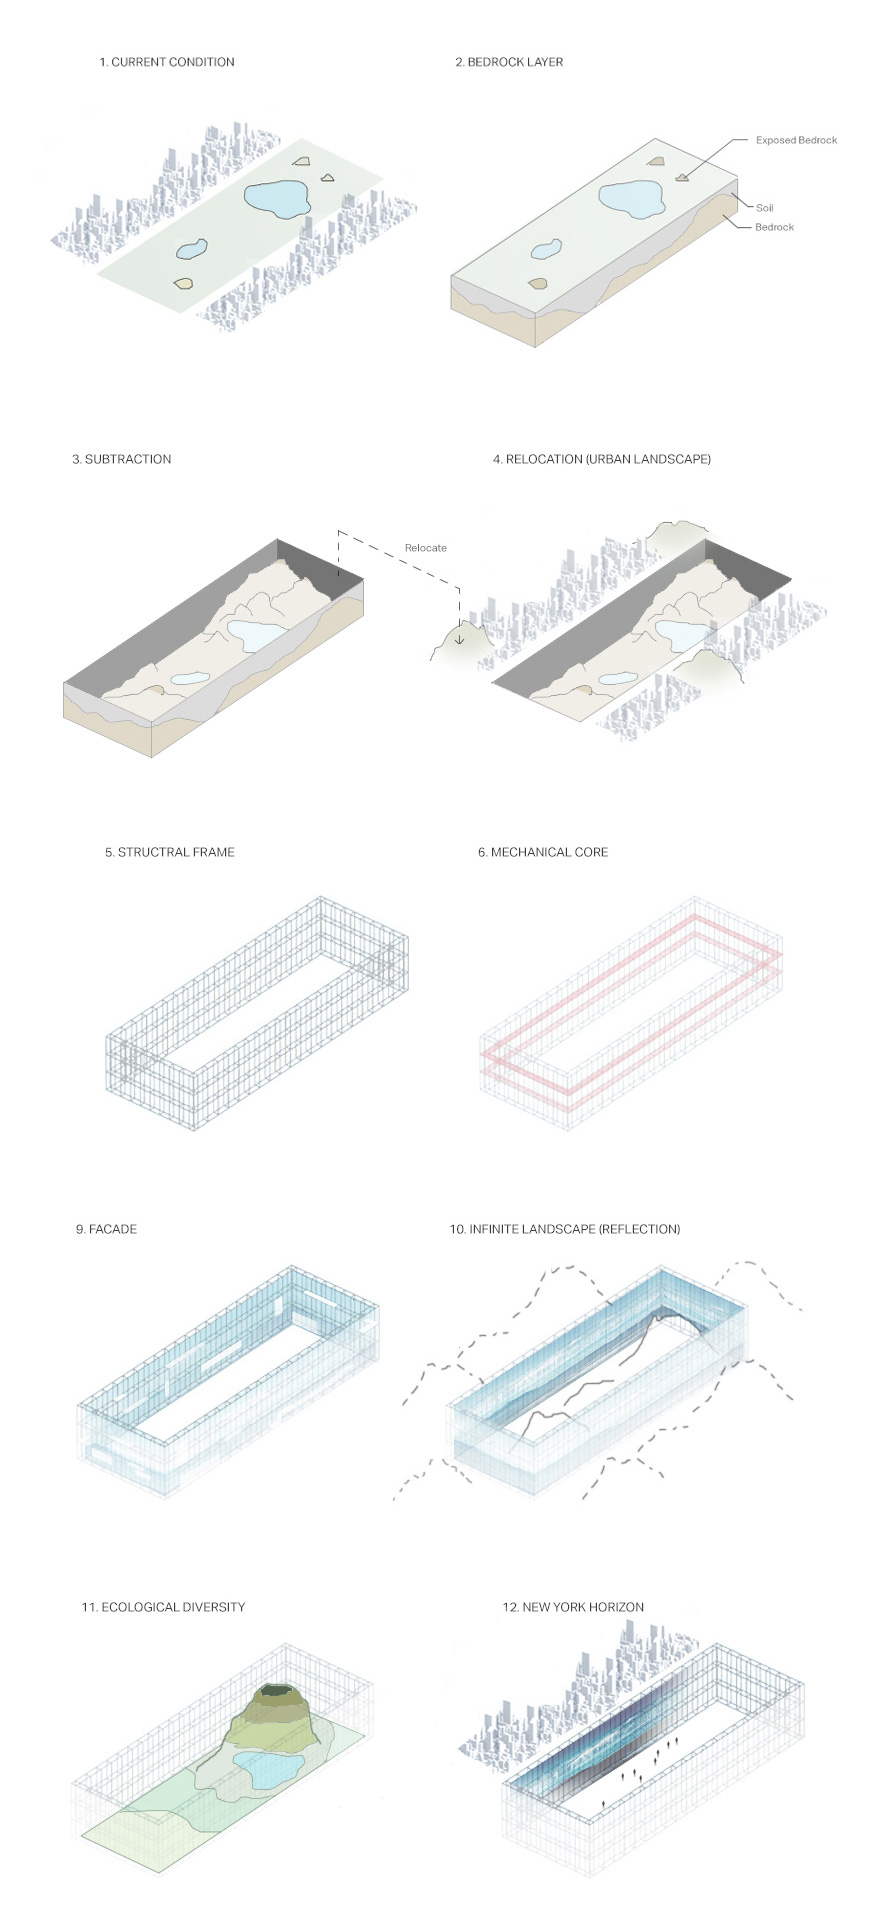 central-park-glass-walls-new-york-horizon-yitan-sun-jianshi-wu-evolo-skyscraper-competition-1